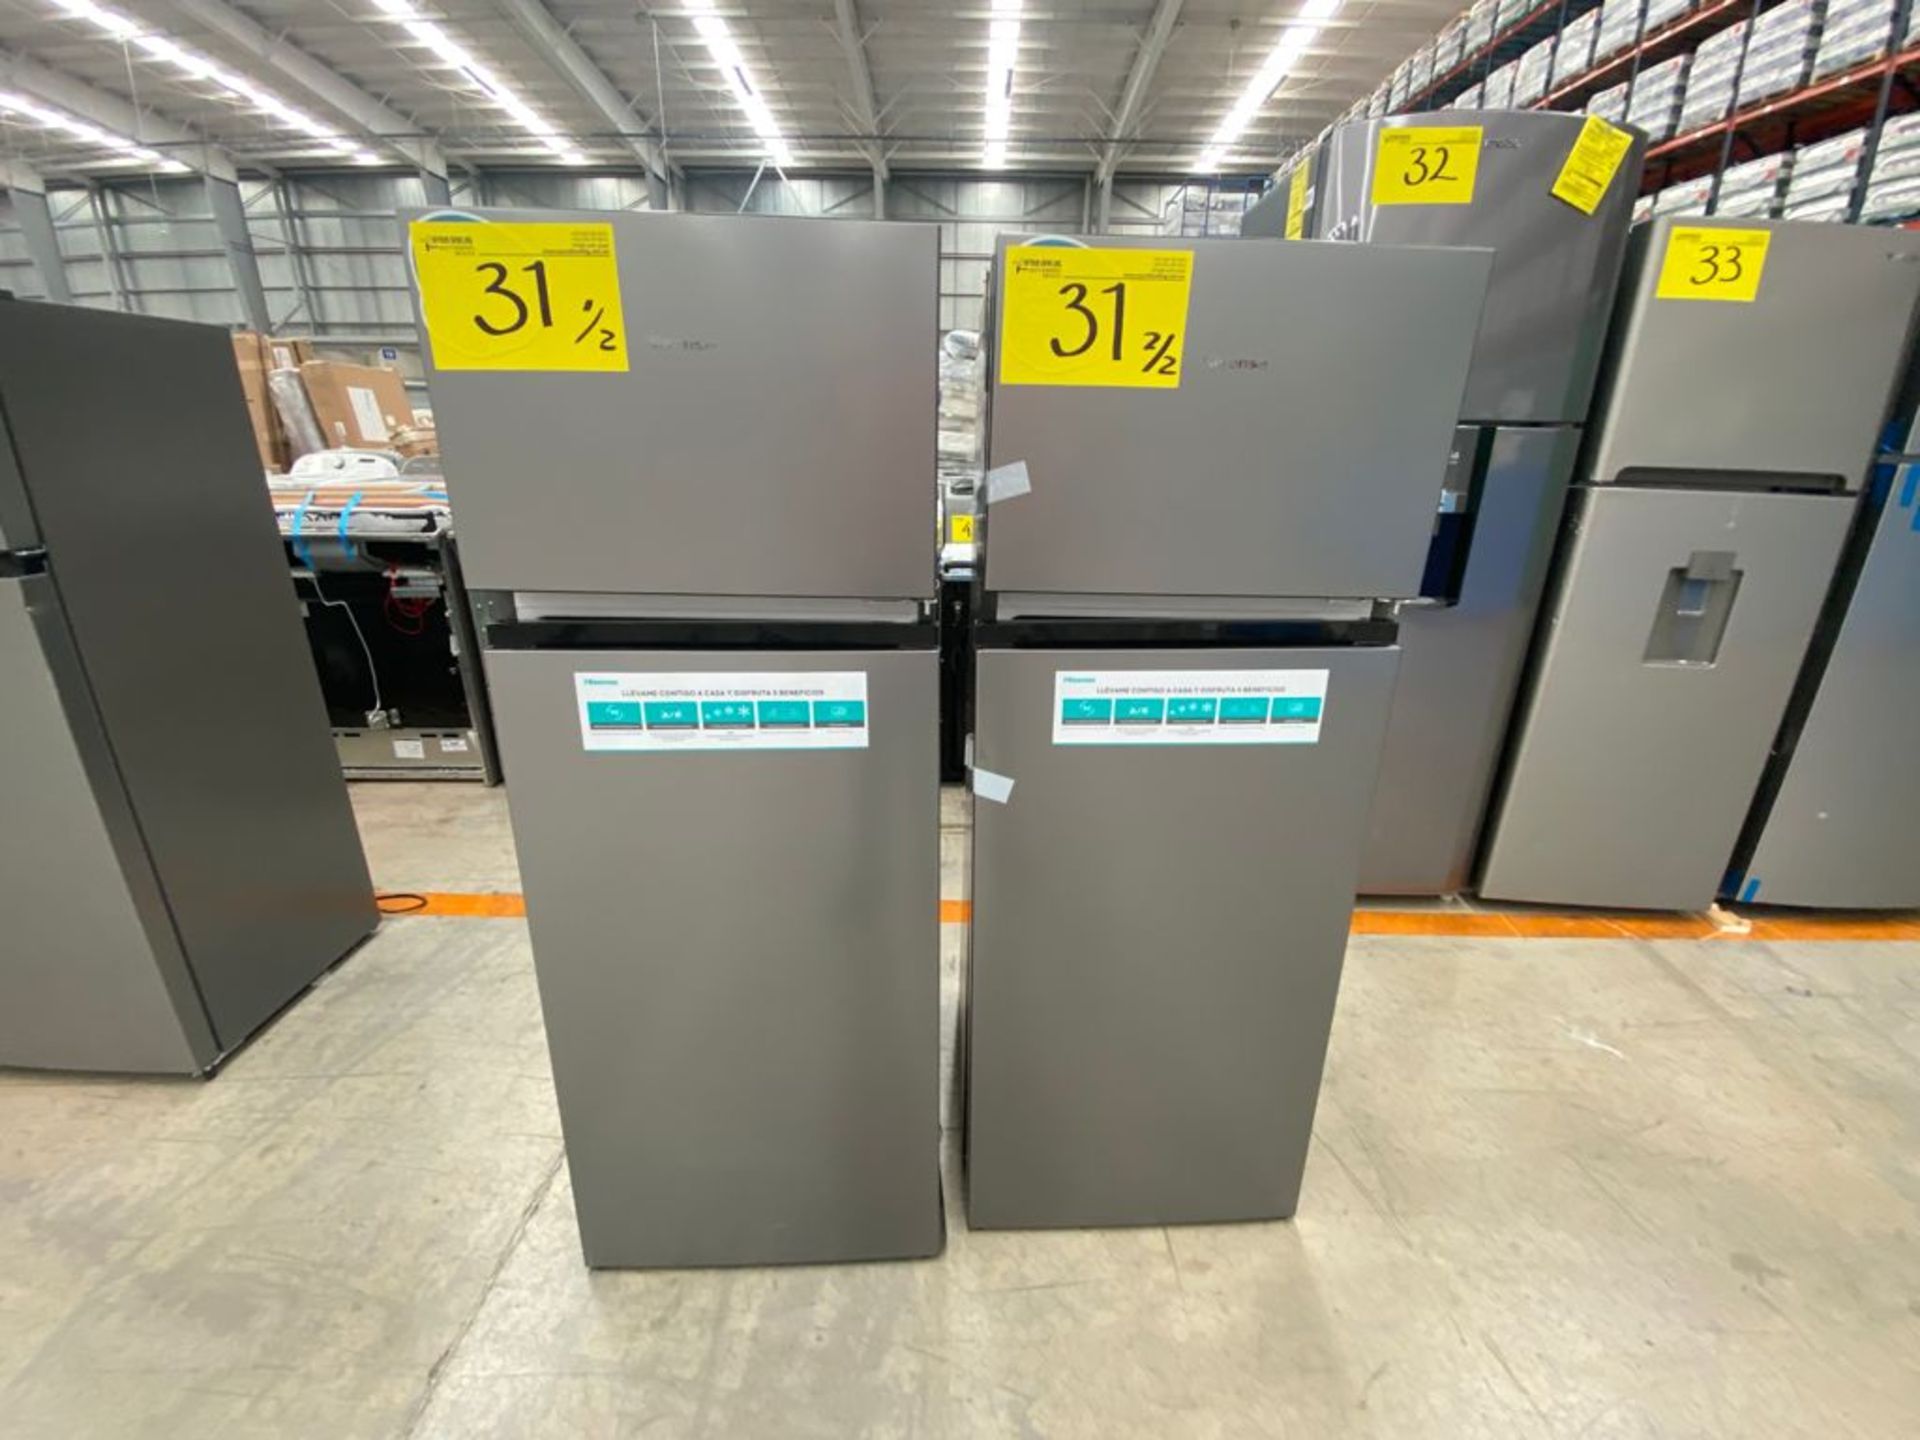 2 Refrigeradores marca Hisense color gris modelo RT80D6AWX